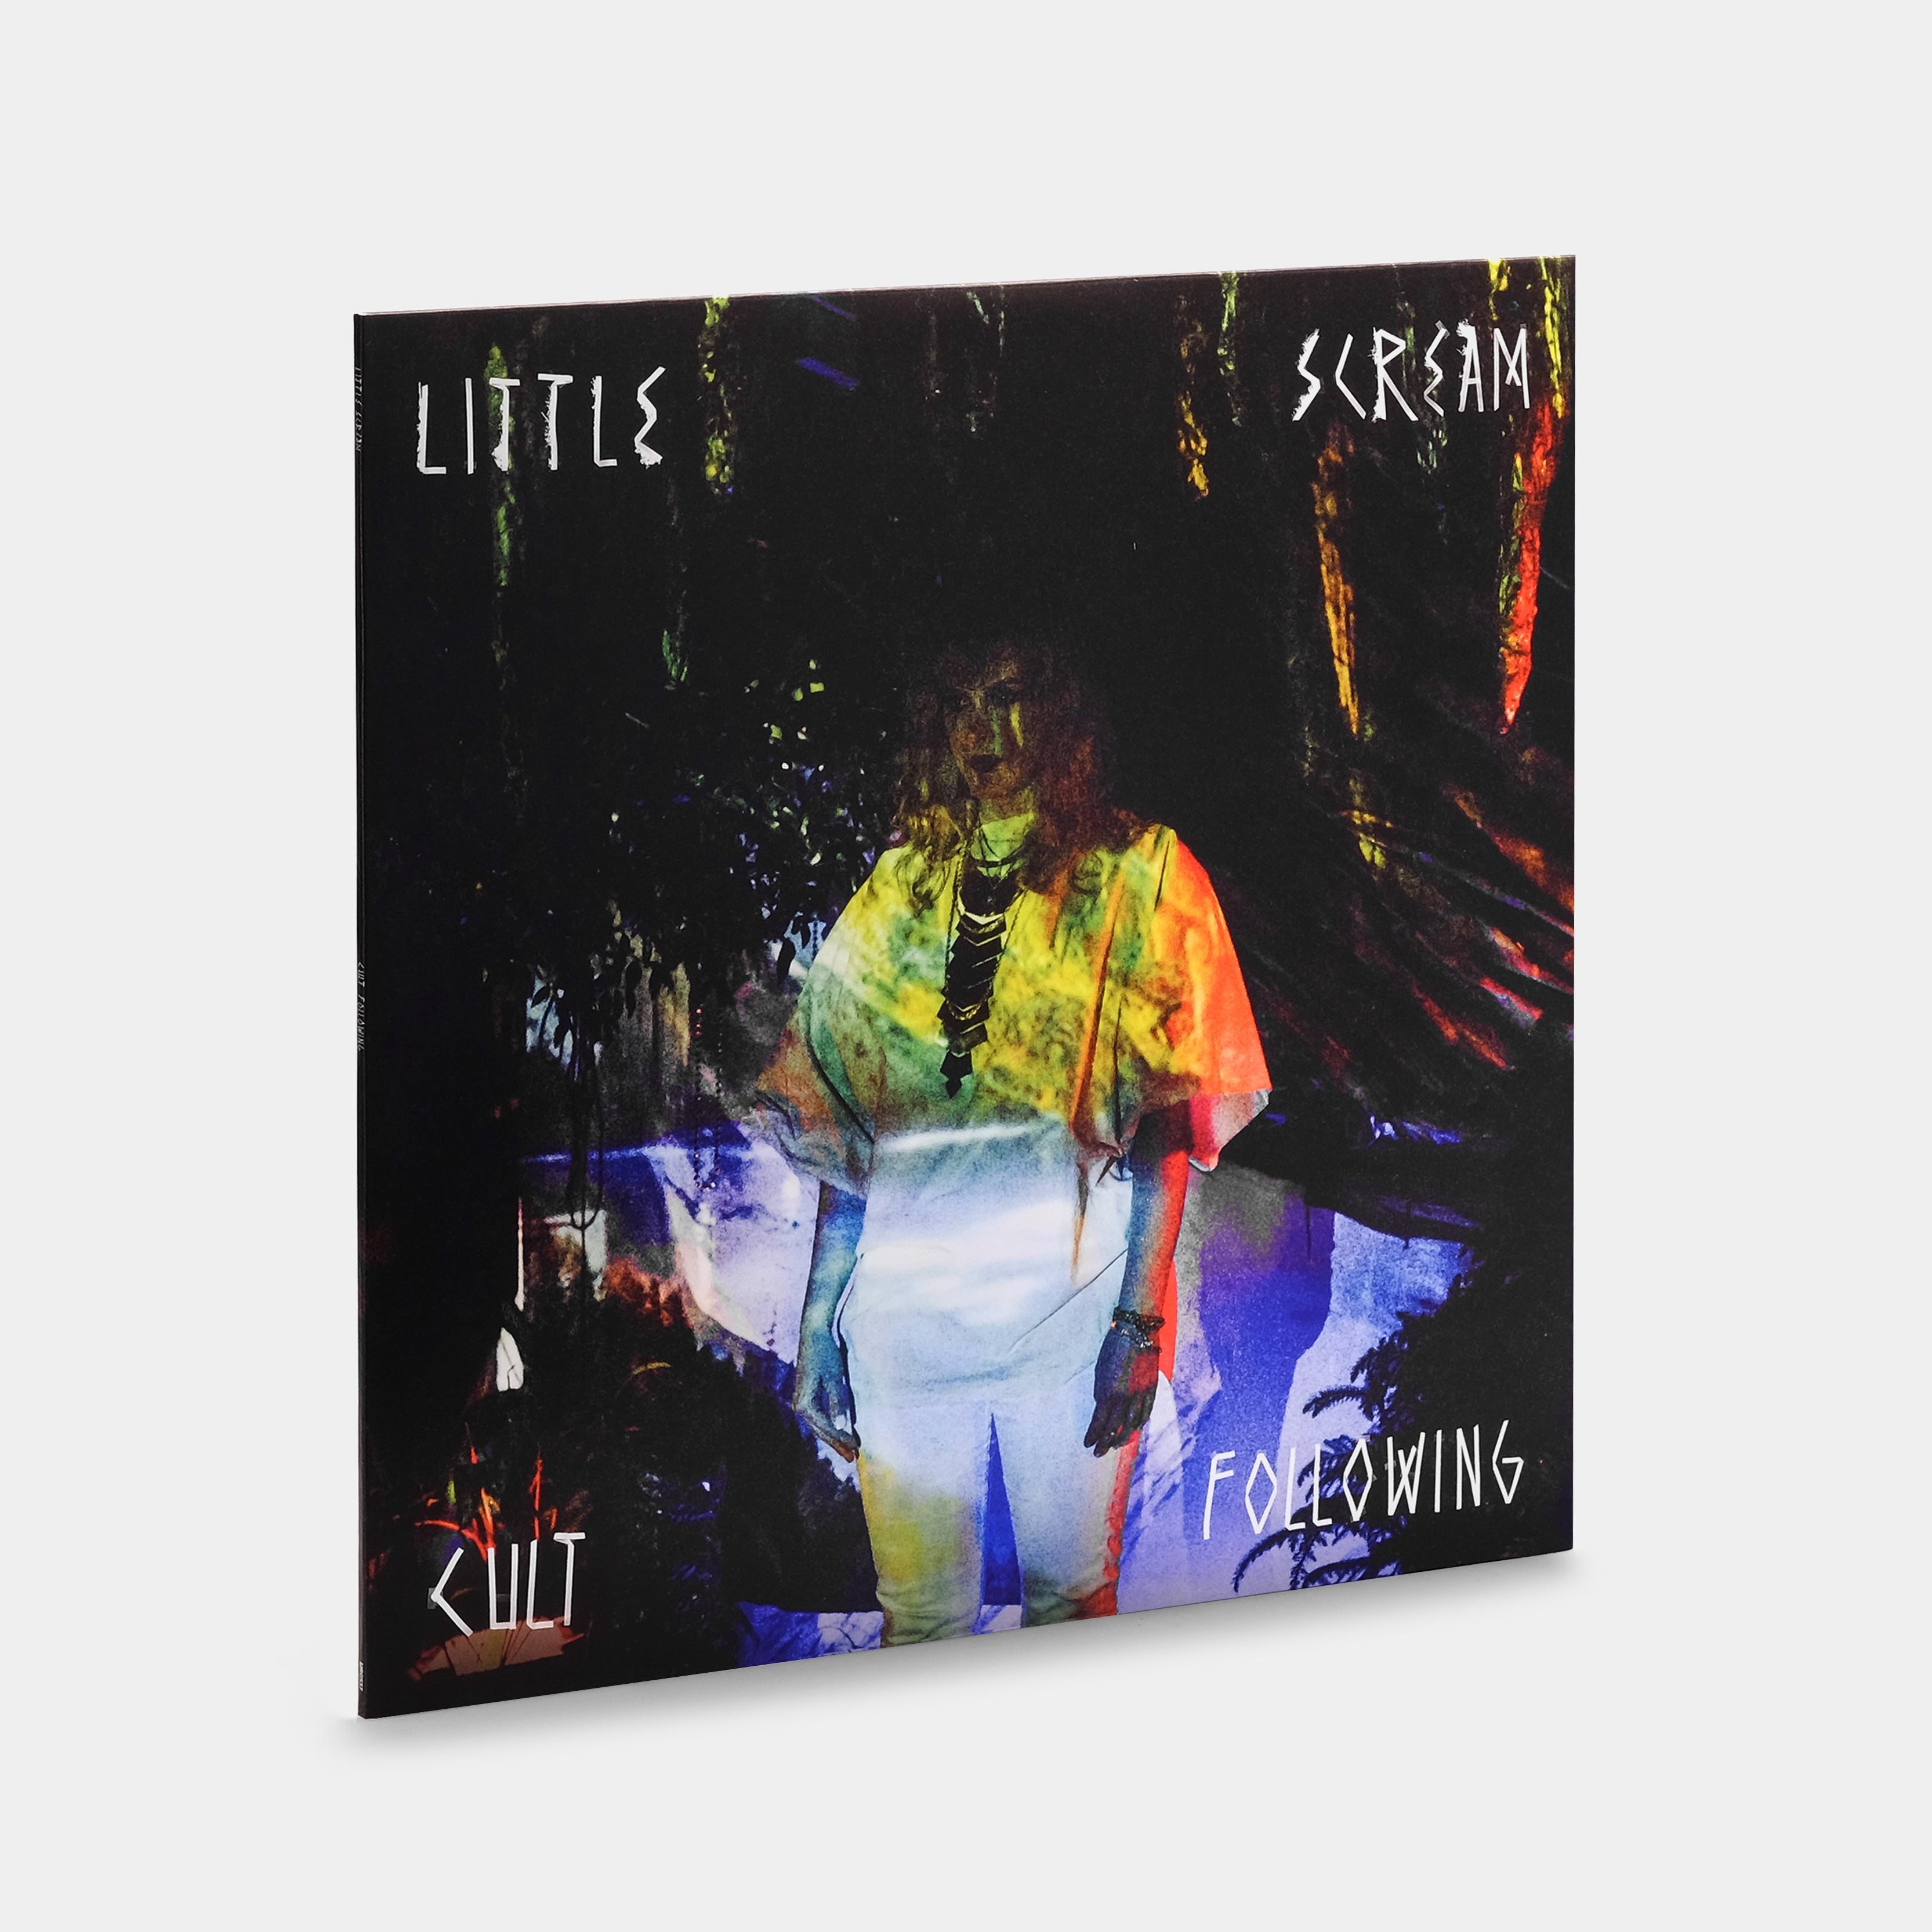 Little Scream - Cult Following LP Translucent Blue Vinyl Record